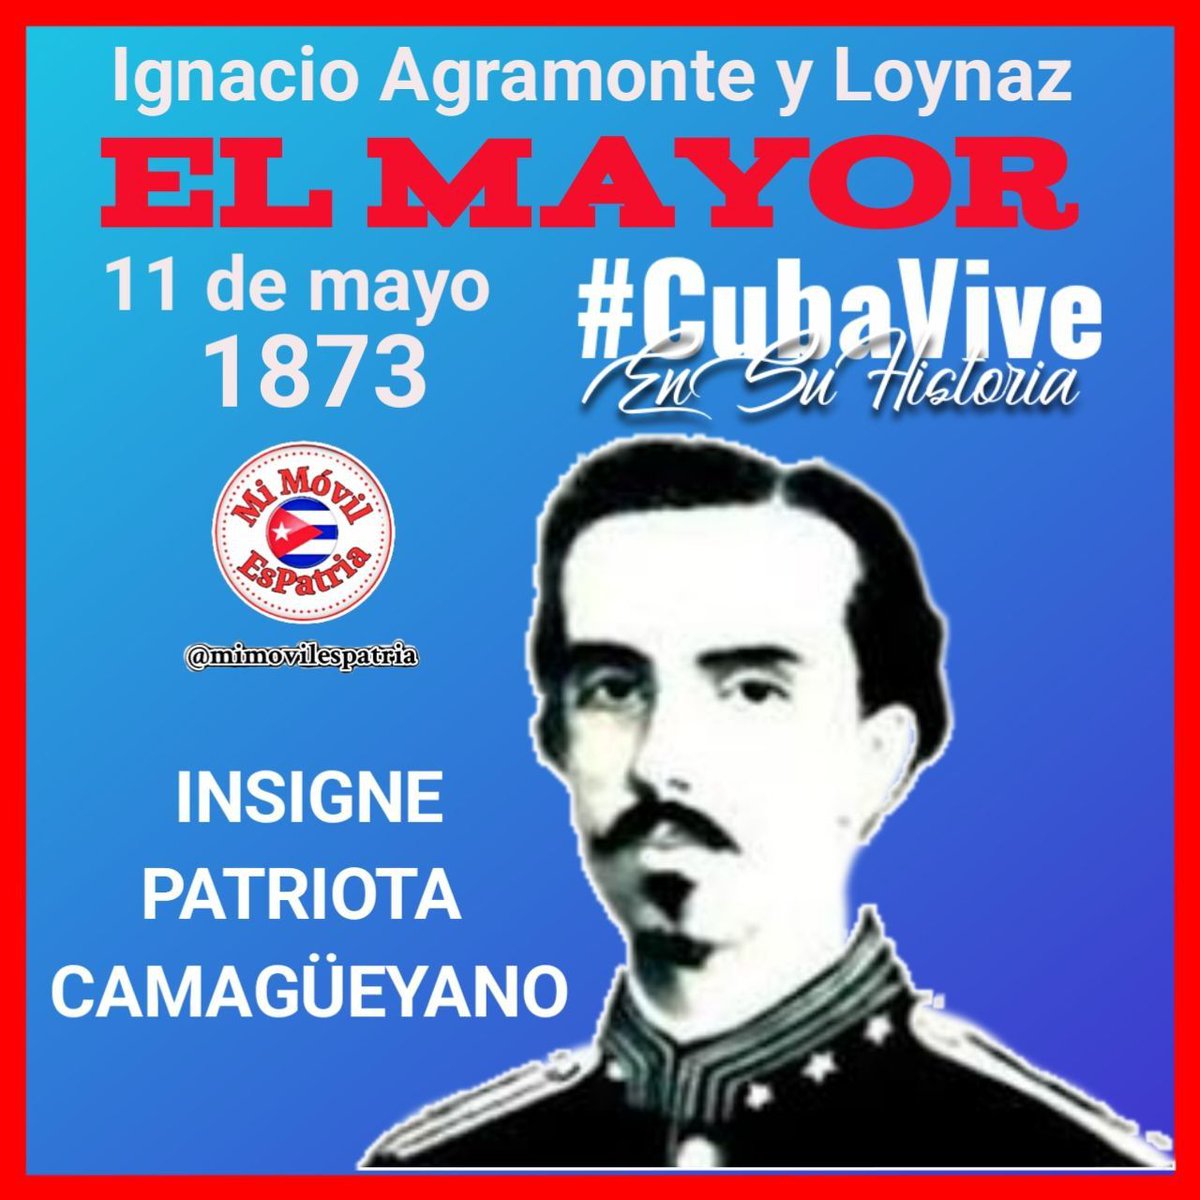 #CubaViveEnSuHistoria
#CubaProtege
#UnaHistoriaJuntos
@CDIYagua2023